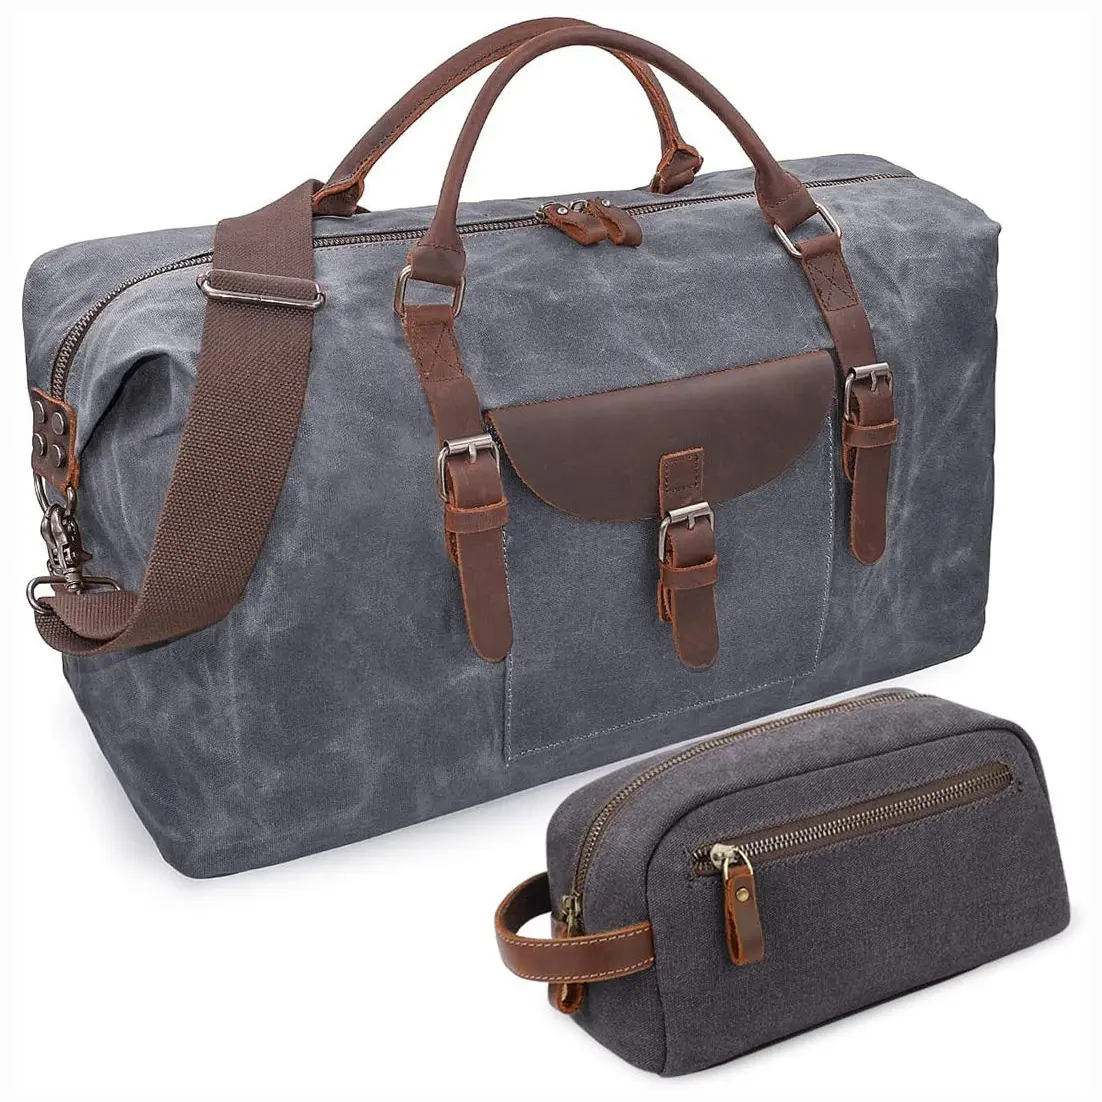 Waxed Grey Canvas Weekend Overnight Bag Weekender Carry-on Oversize Handbag Travel Duffel Bag for Women Tote Bag